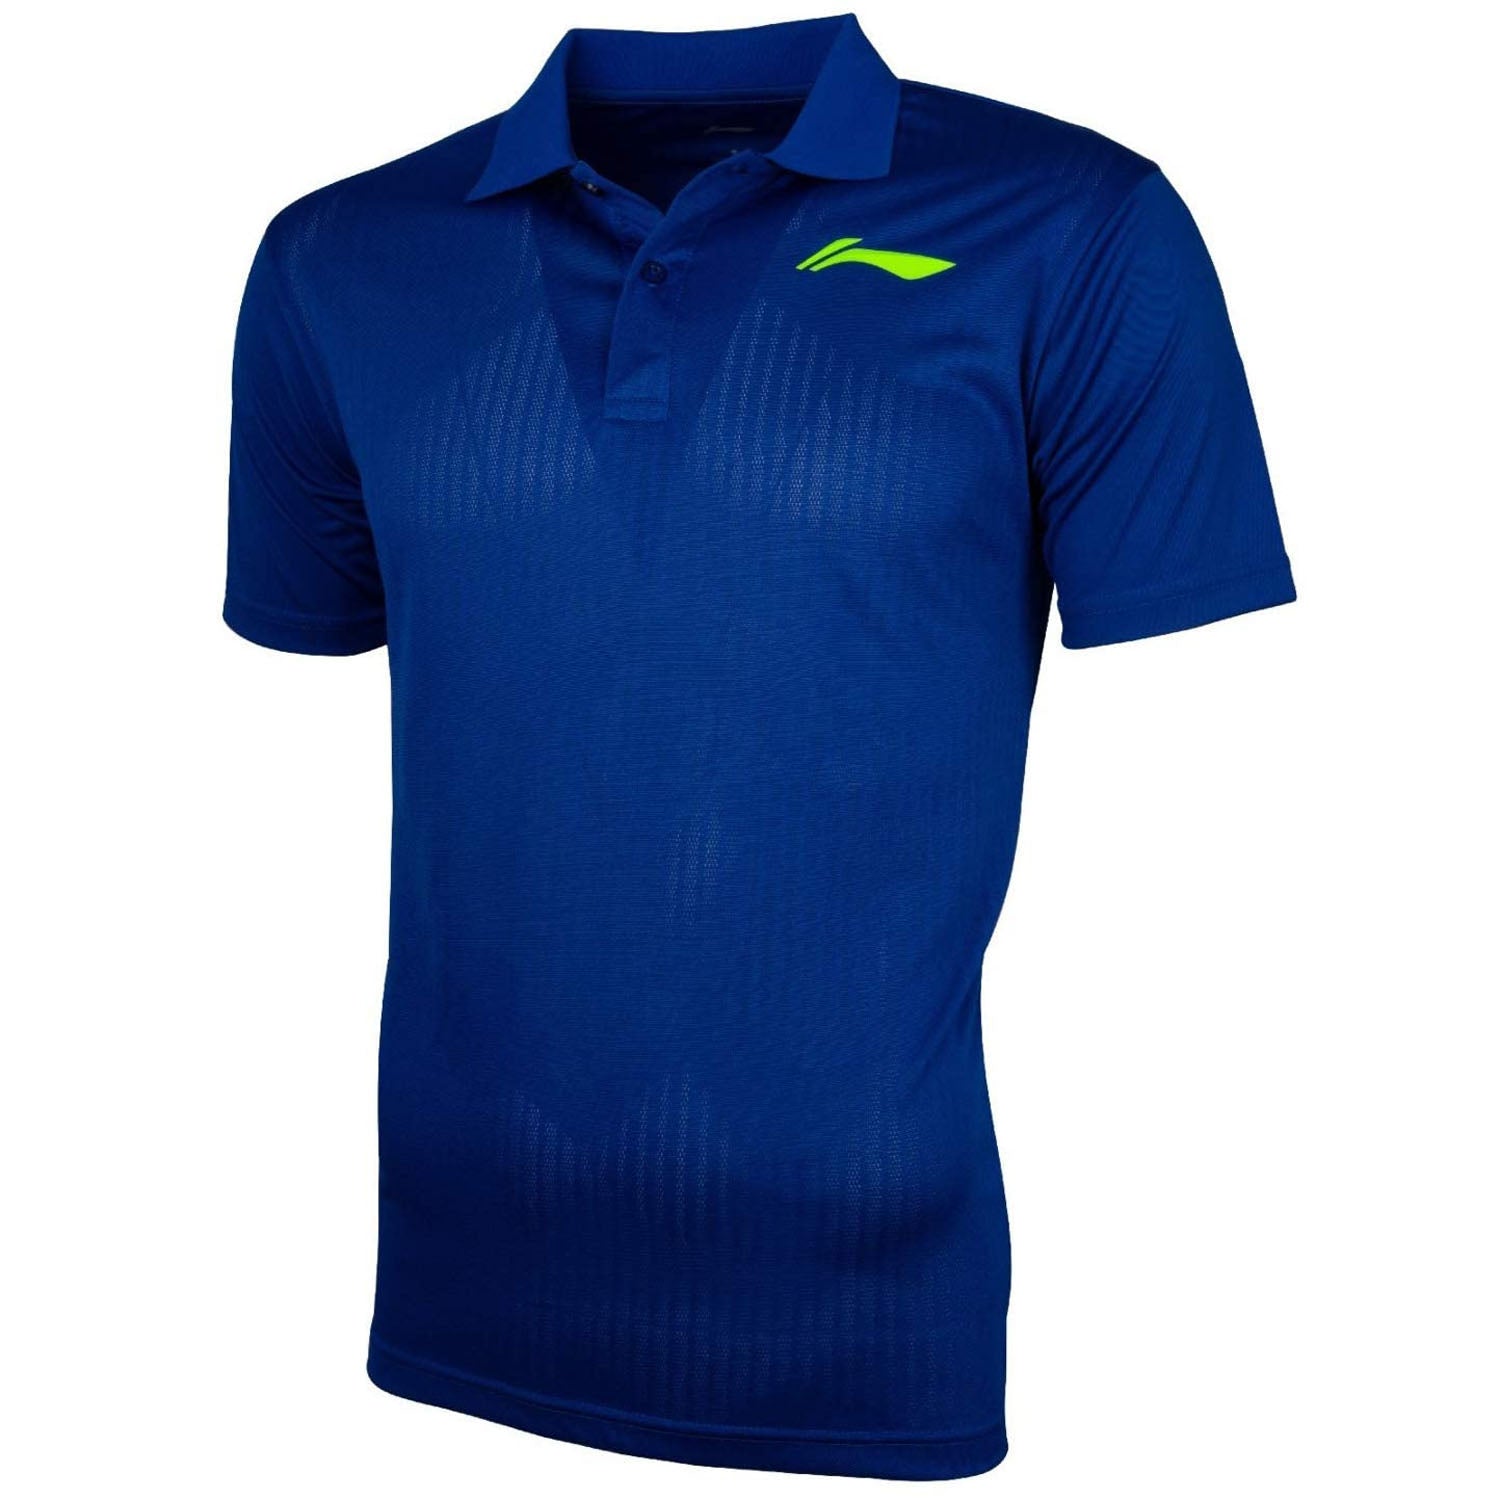 Li-Ning Training Polo T Shirt - Best Price online Prokicksports.com